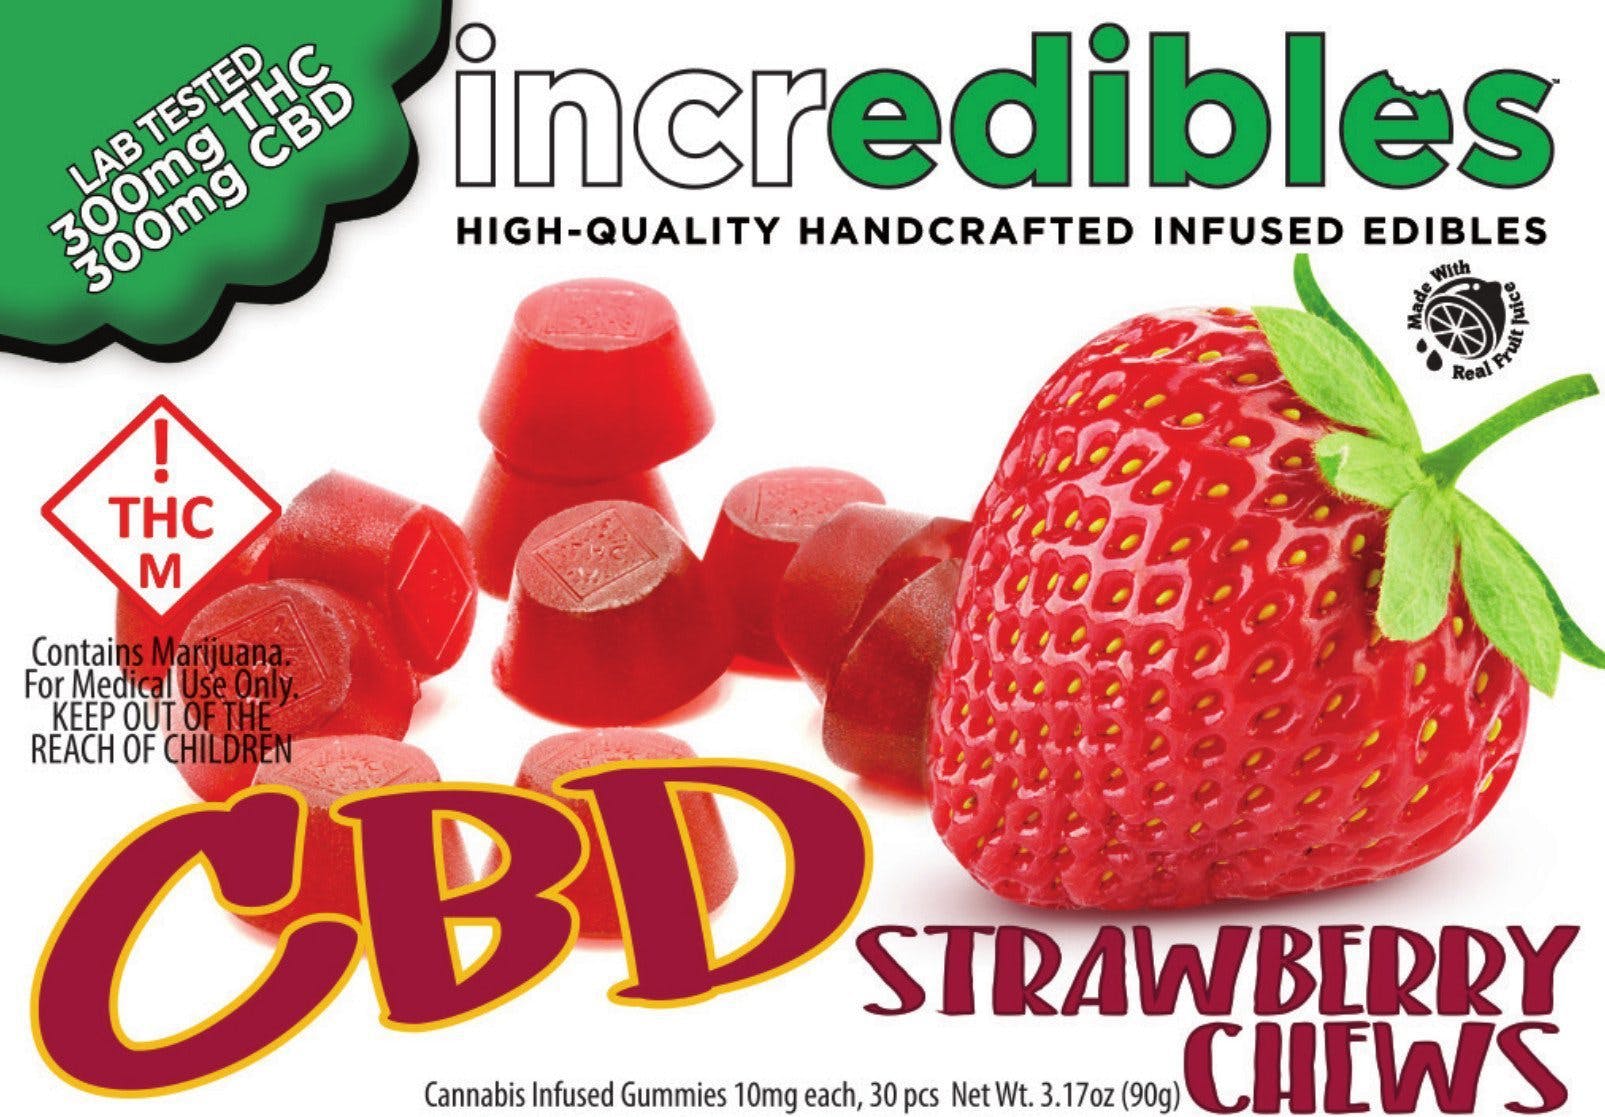 Incredible's Strawberry CBD Chews